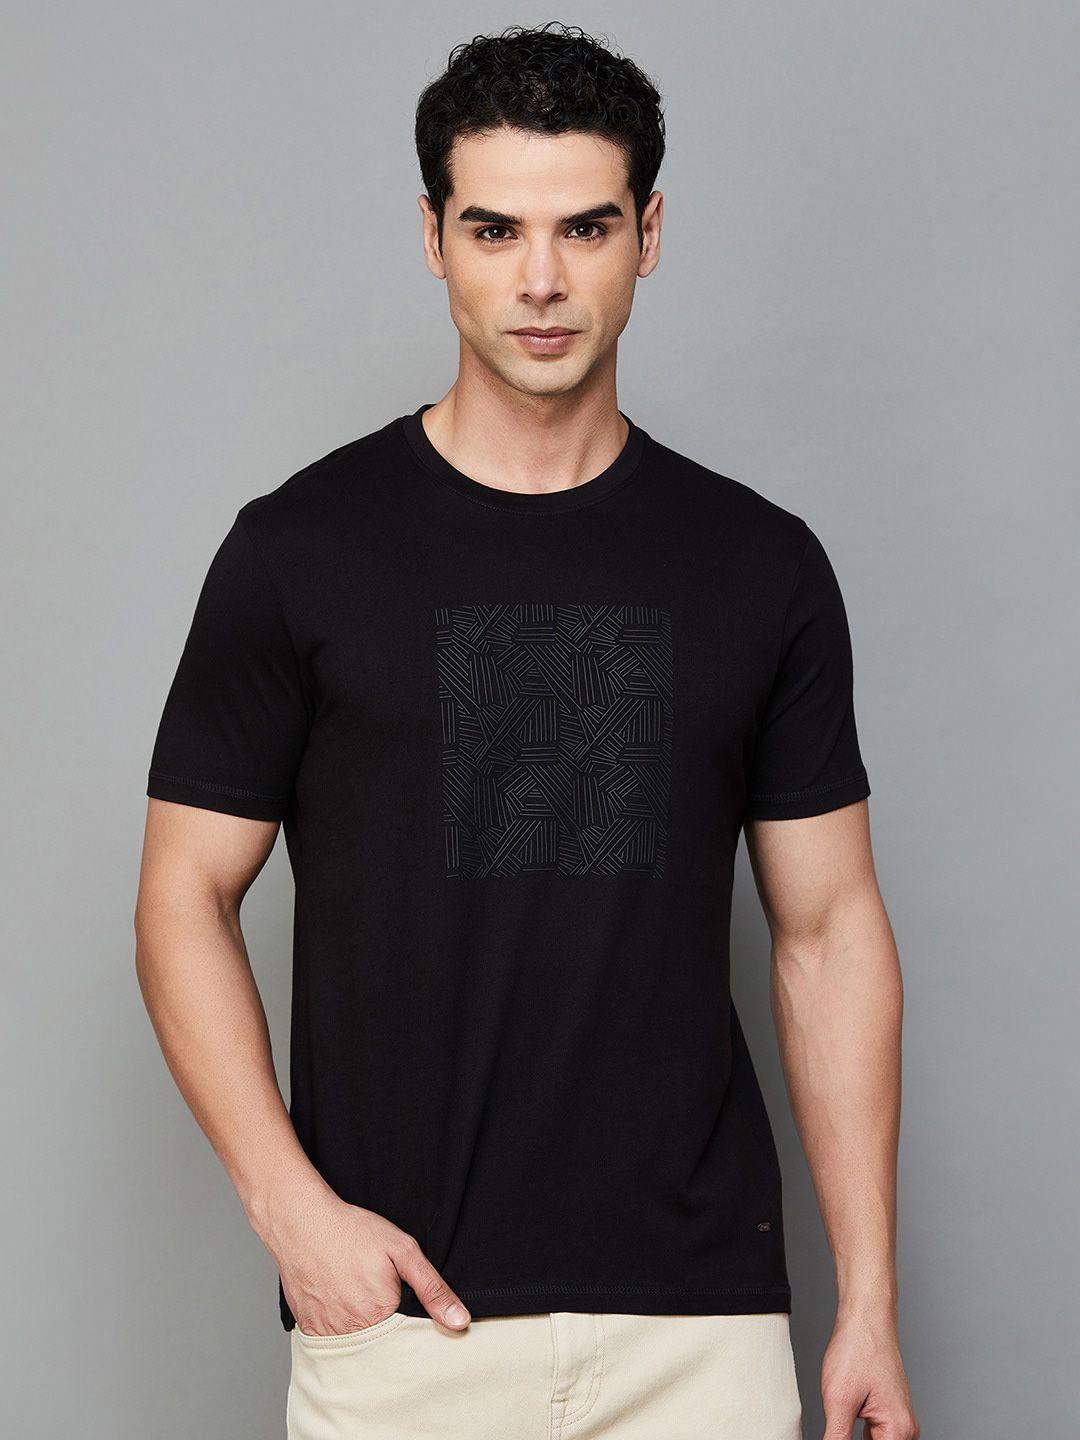 code by lifestyle round neck cotton tshirt